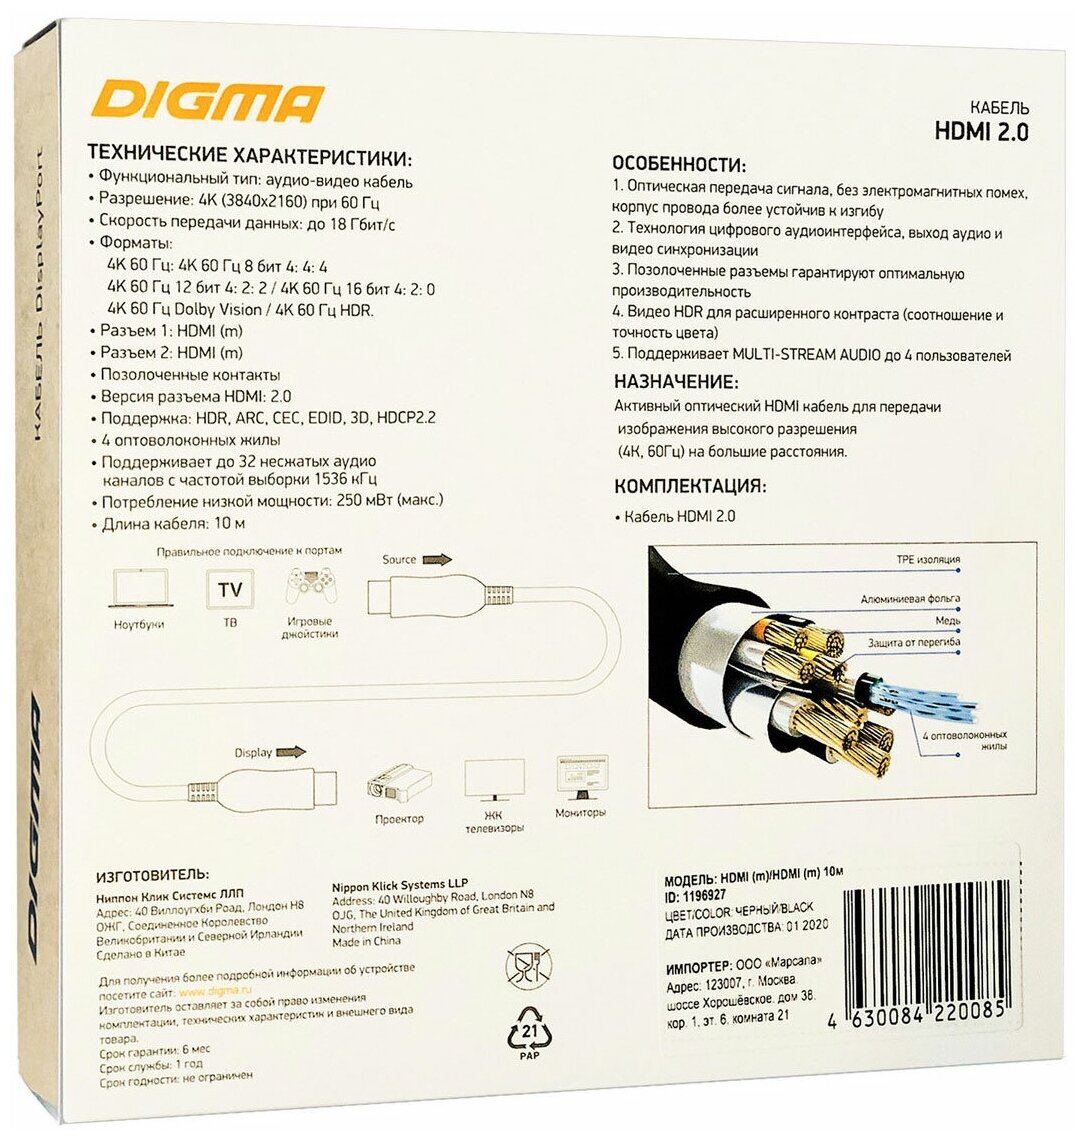 Кабель аудио-видео DIGMA HDMI 2.0 AOC, HDMI (m) - HDMI (m) , ver 2.0, 10м, GOLD черный [bhp aoc 2.0-10] - фото №8